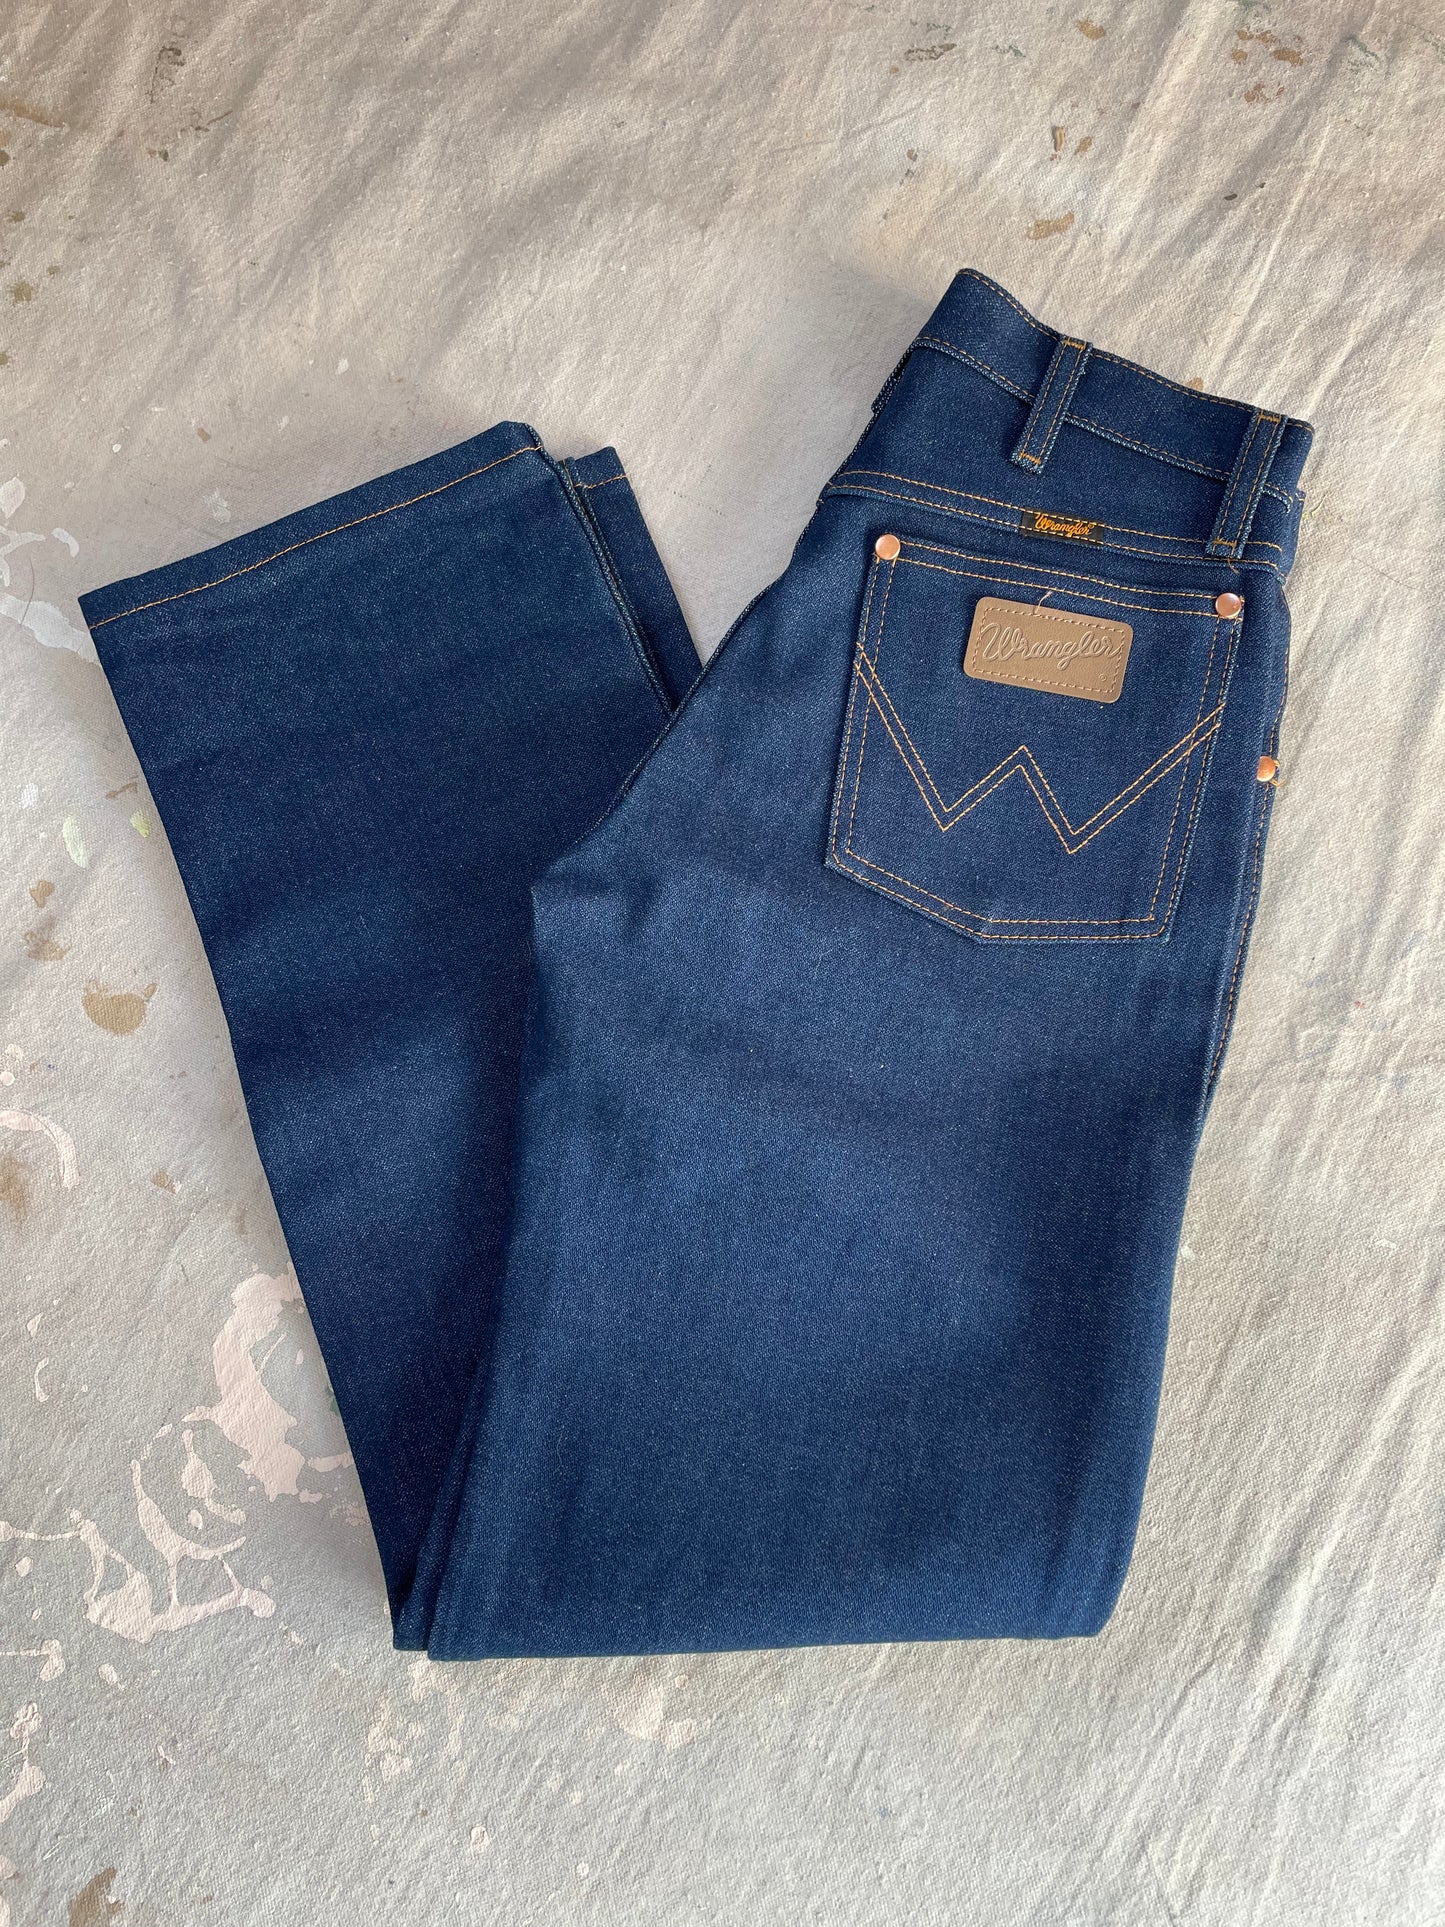 80s Deadstock Wrangler Jeans